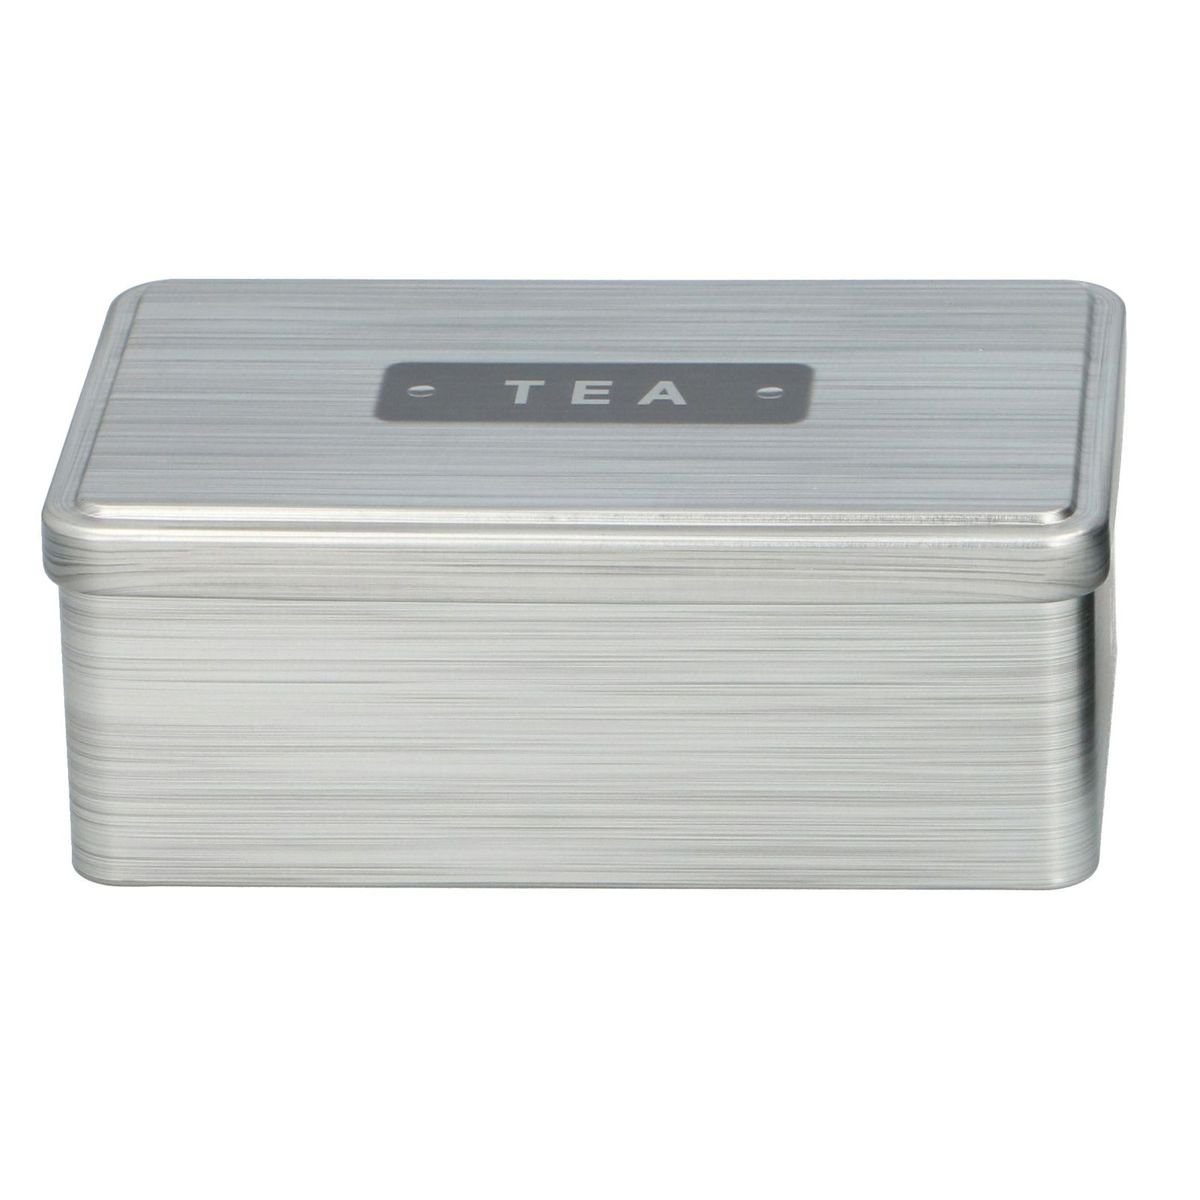 Marabellas Shop Teebox Aufbewahrungsbox Teebox 18x11x7 cm aus Blech mit Aufdruck "TEA", Metall